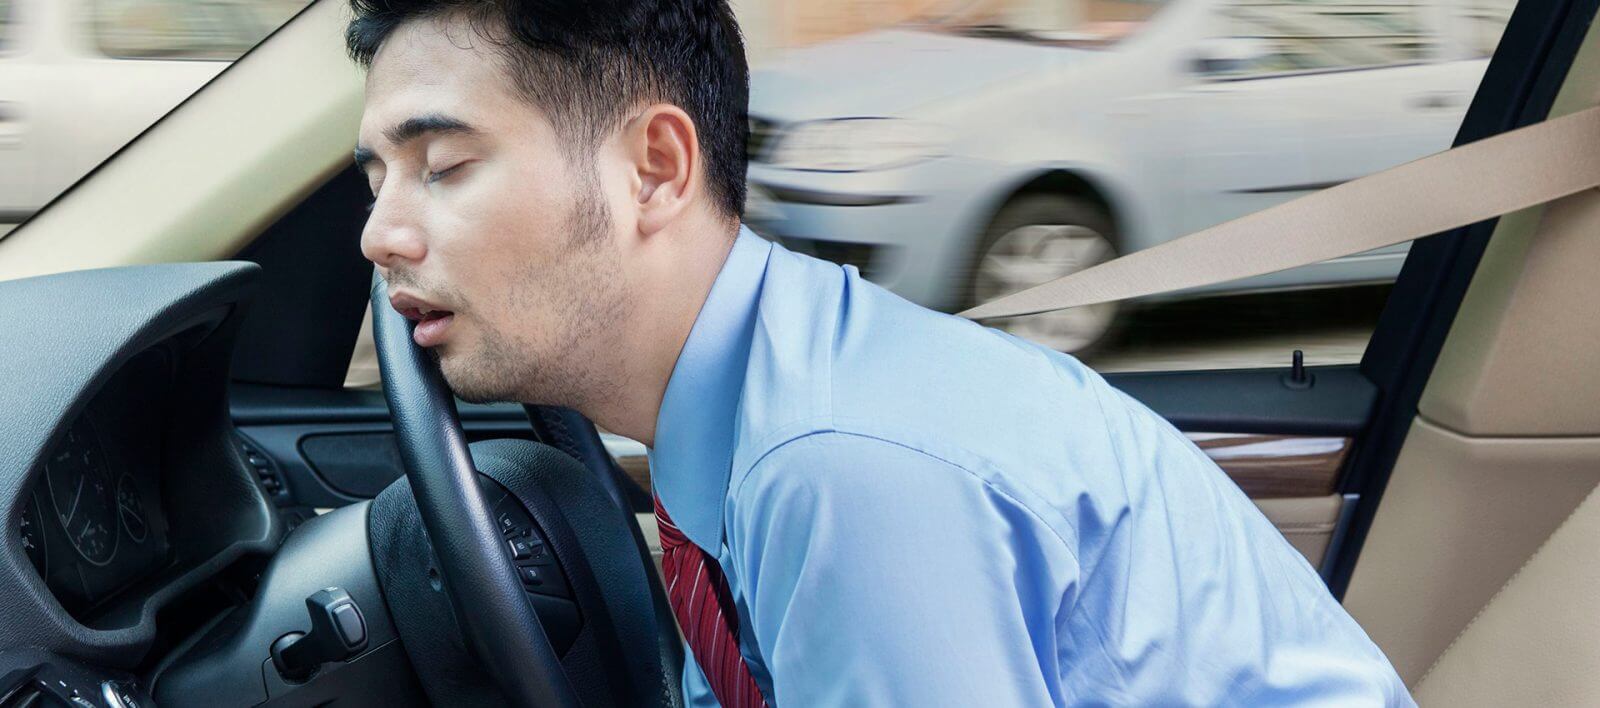 Image Tips for Eliminating Eye Strain When Driving